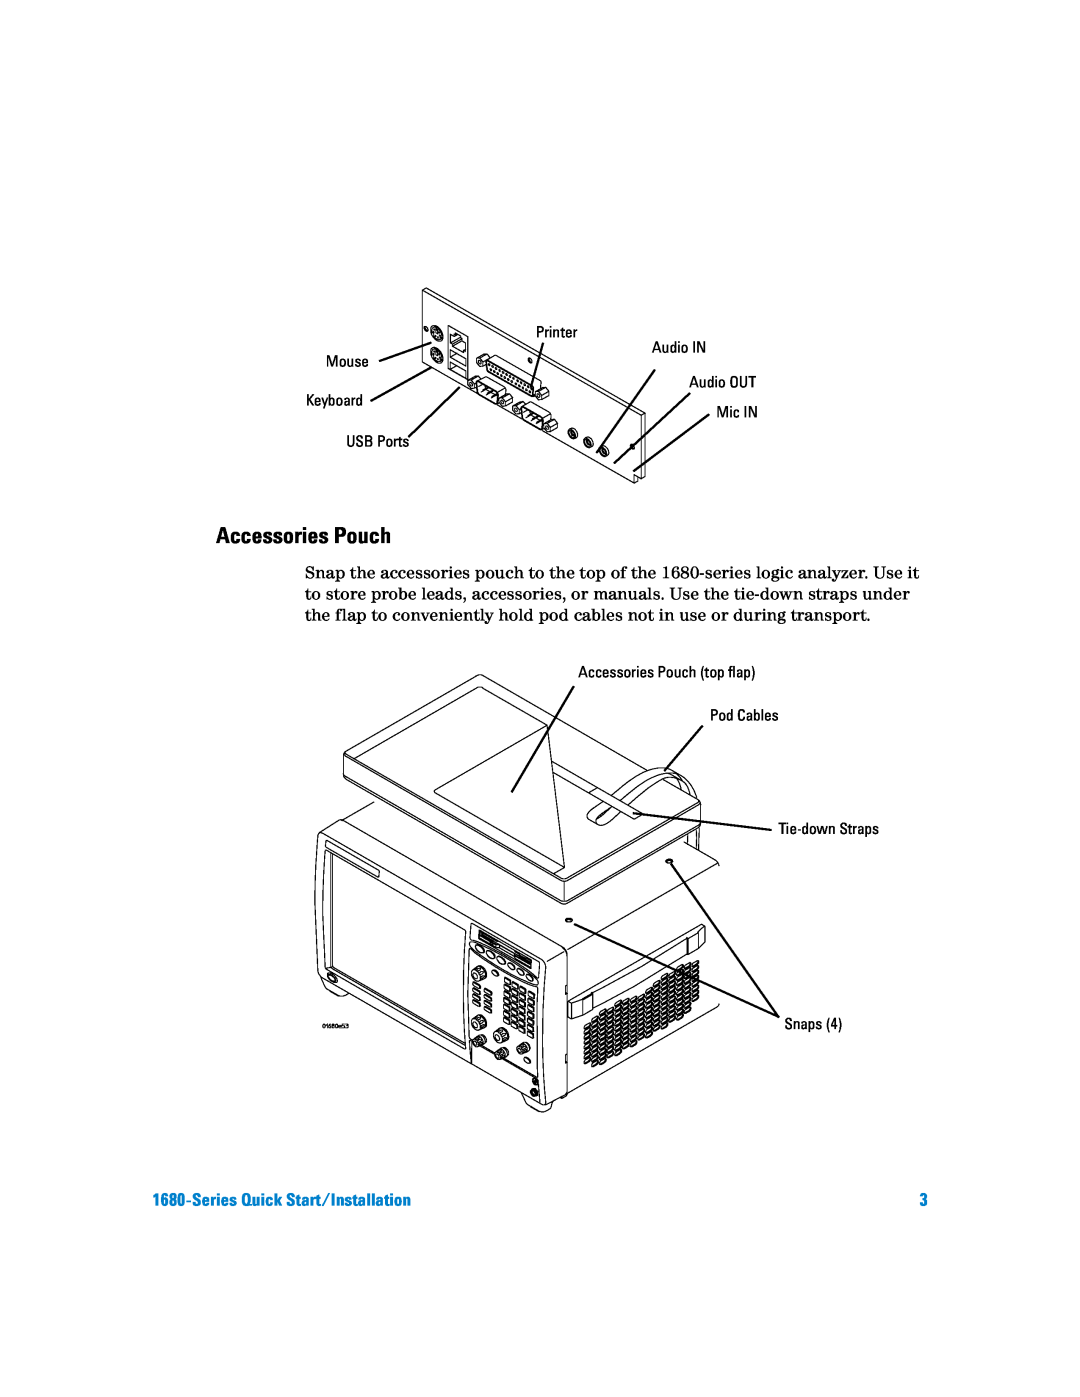 Agilent Technologies 1680 quick start Accessories Pouch, Series Quick Start/Installation 